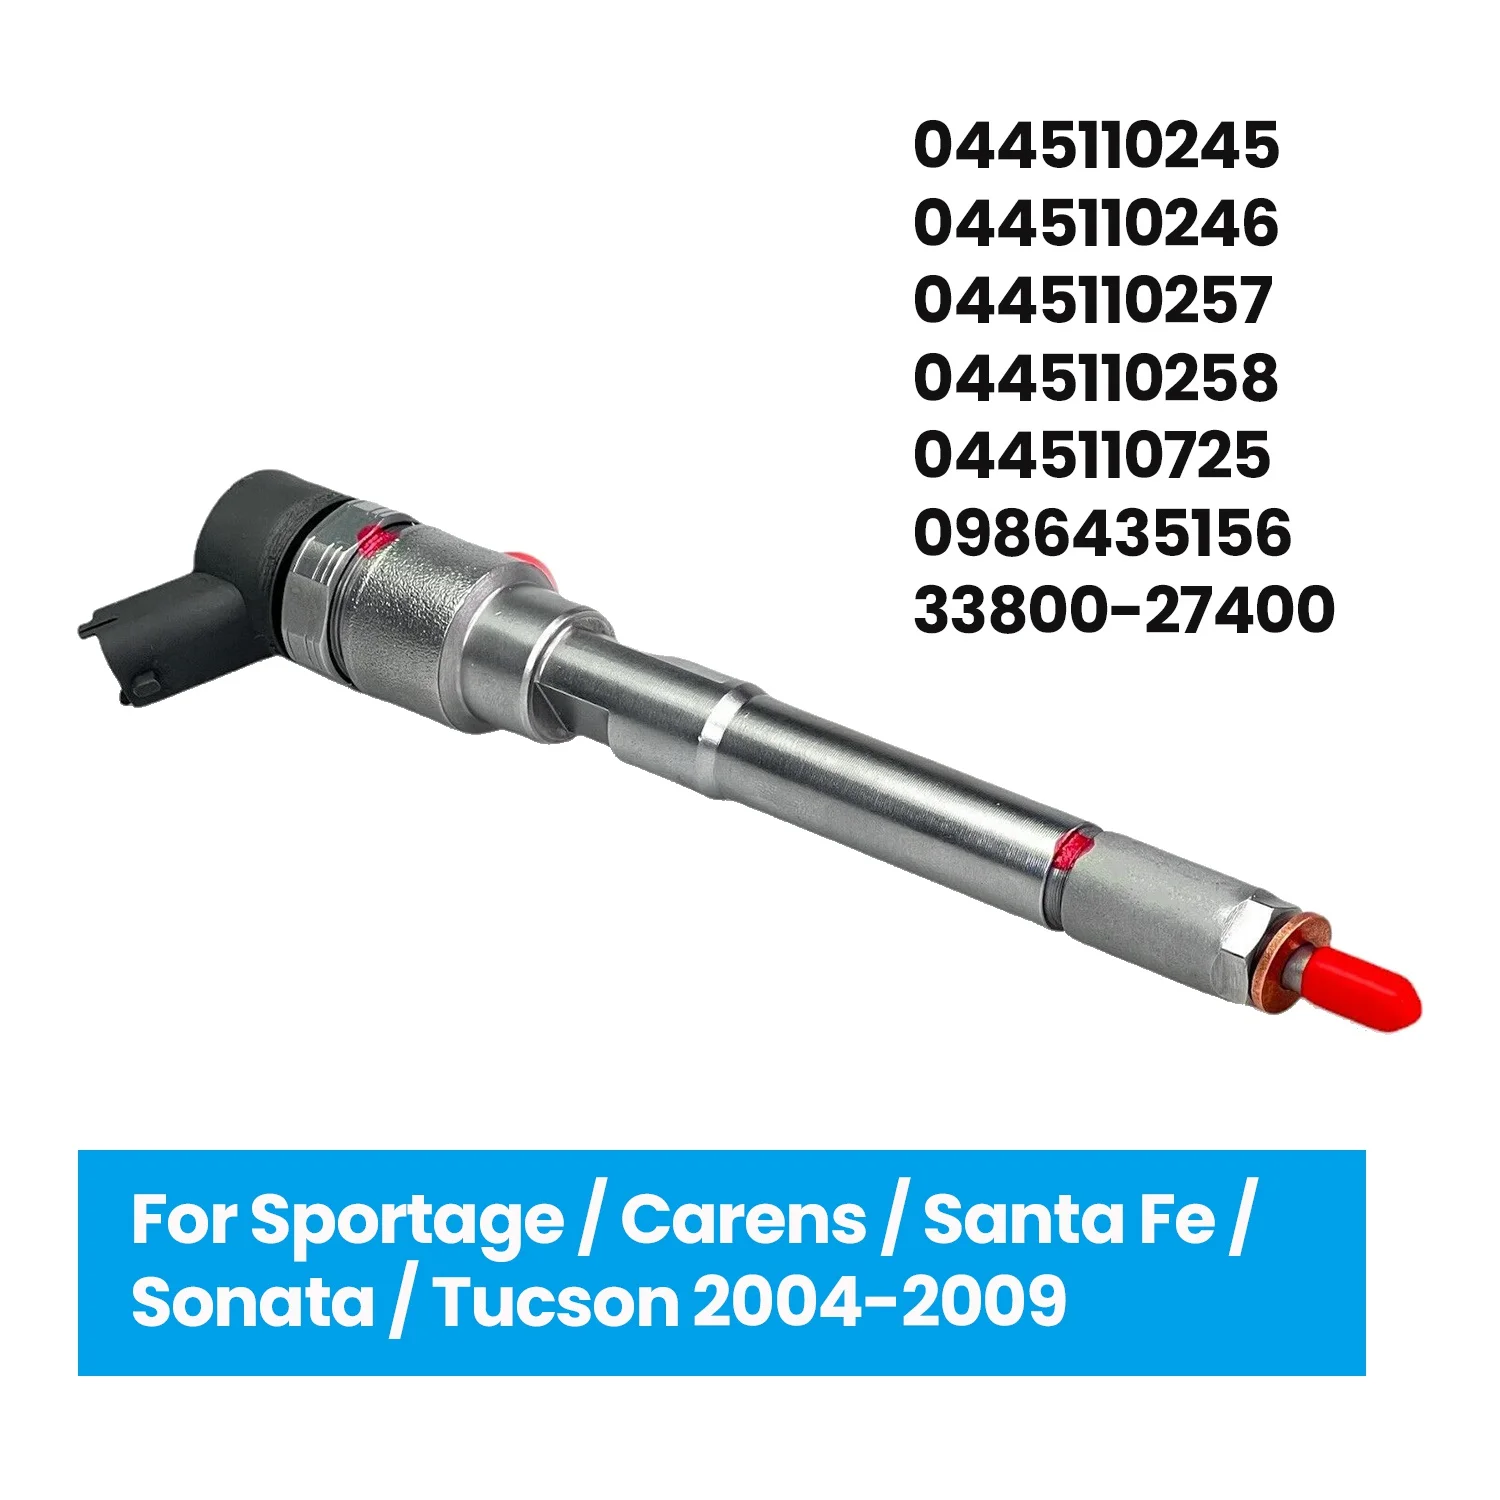 

New CRDi Diesel Fuel Injector 33800-27400 0445110245 for Hyundai Kia SANTA FE SONATA TUCSON SPORTAGE CARENS 2004-2009